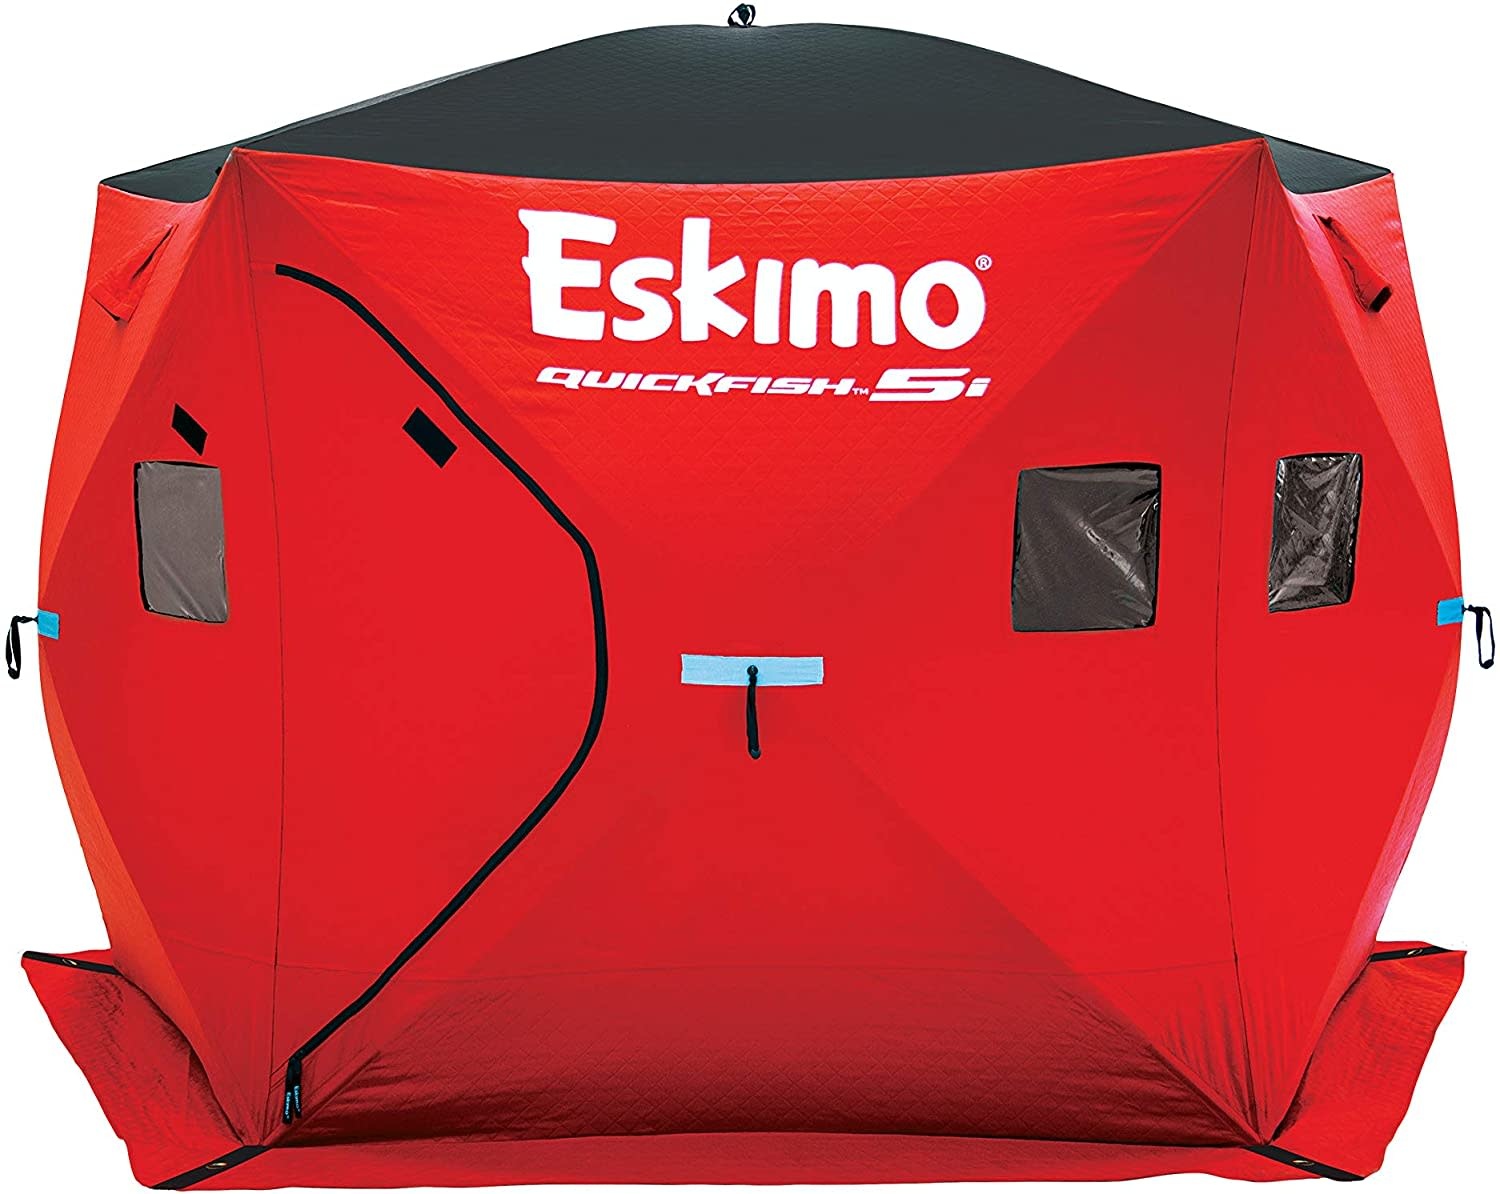 Eskimo 24105 Quickfish 5i Insulated Pop-Up Ice Shelter - Mountain